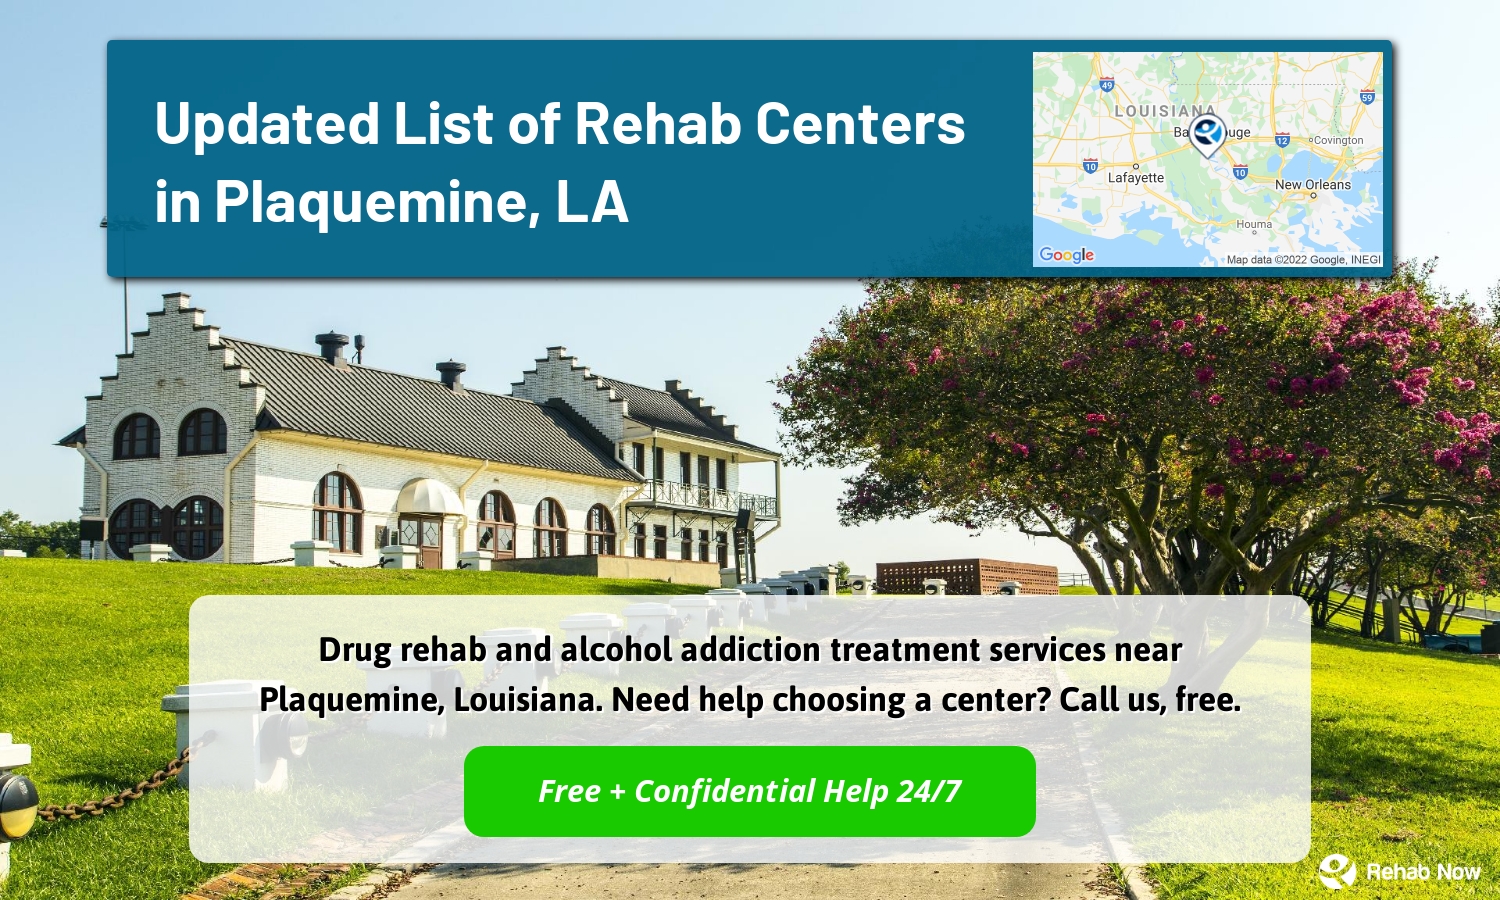 Drug rehab and alcohol addiction treatment services near Plaquemine, Louisiana. Need help choosing a center? Call us, free.